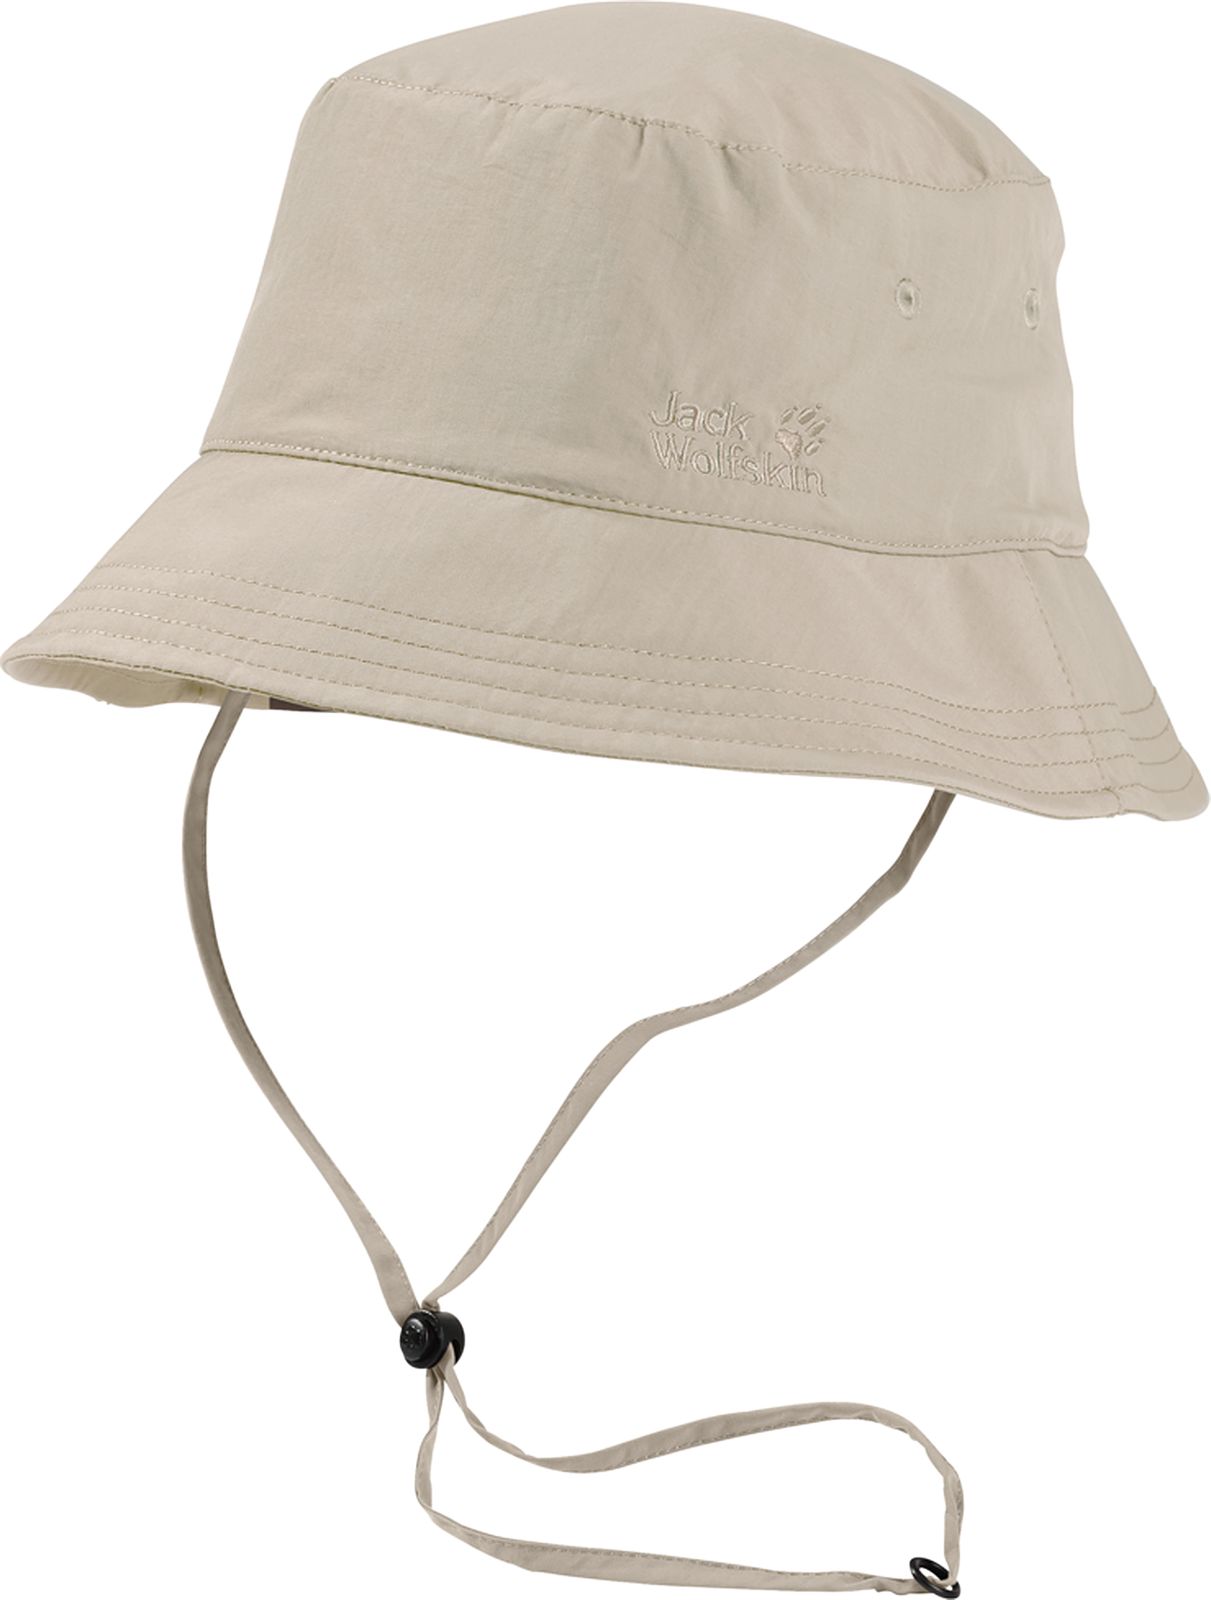 Панама Jack Wolfskin Supplex Sun Hat, цвет: бежевый. 1903391-5505. Размер M (54/57)